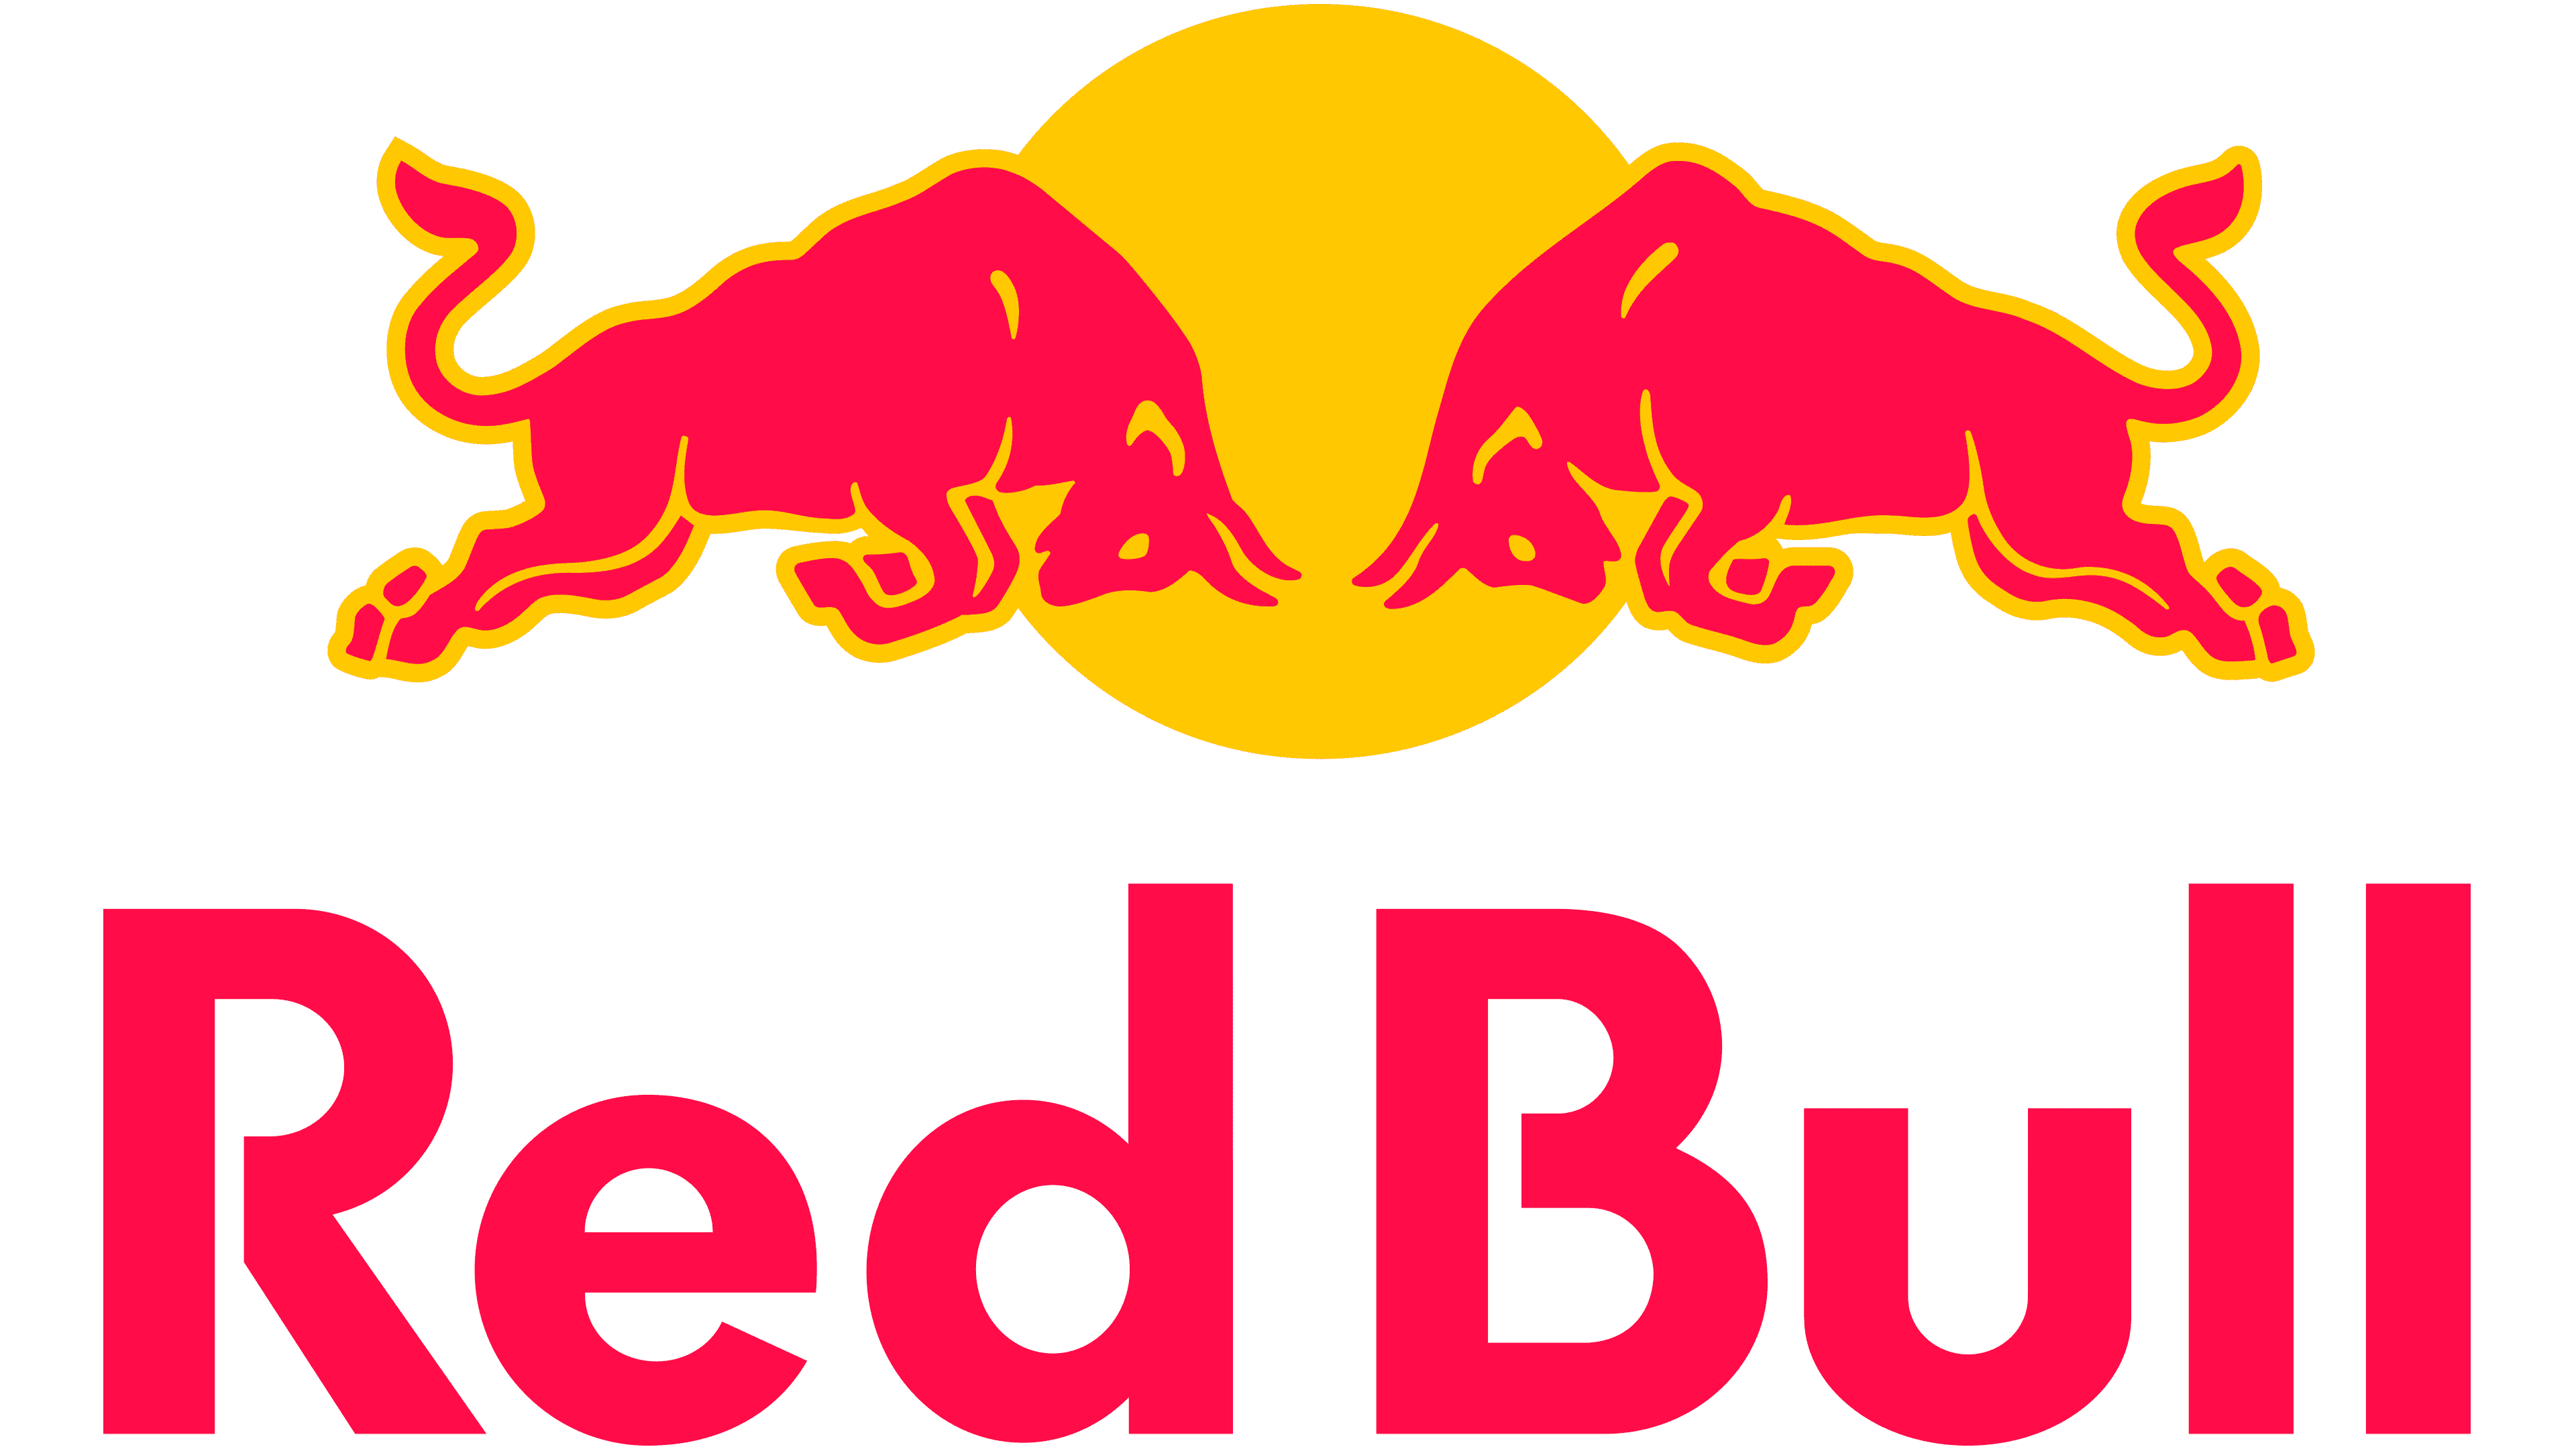 Red Bull mela creative creator brand logos